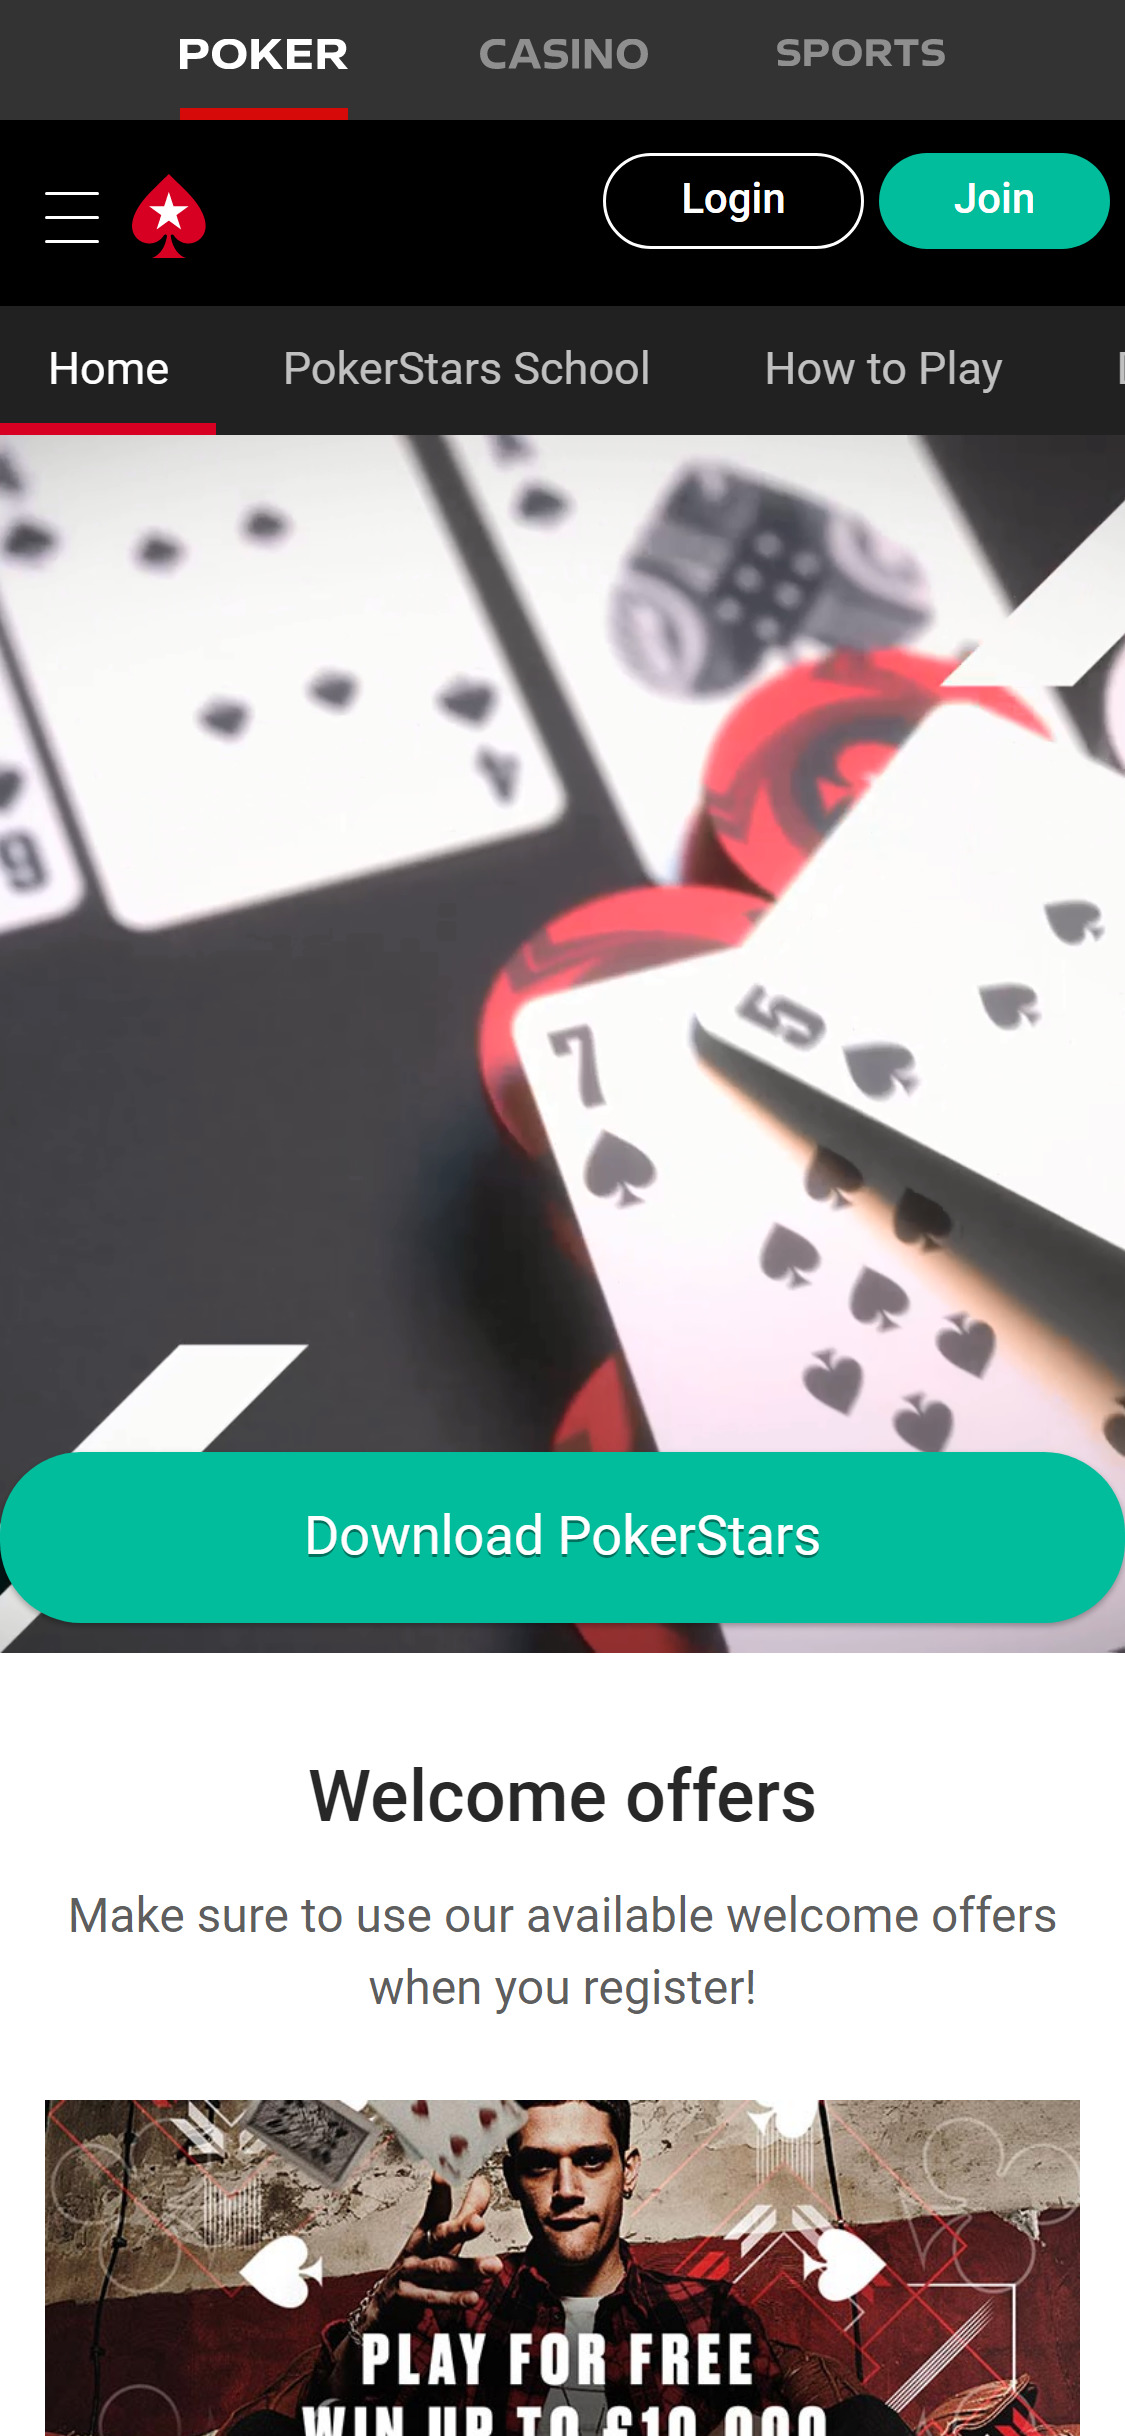 Poker Stars Casino Mirror Mobile Login Review